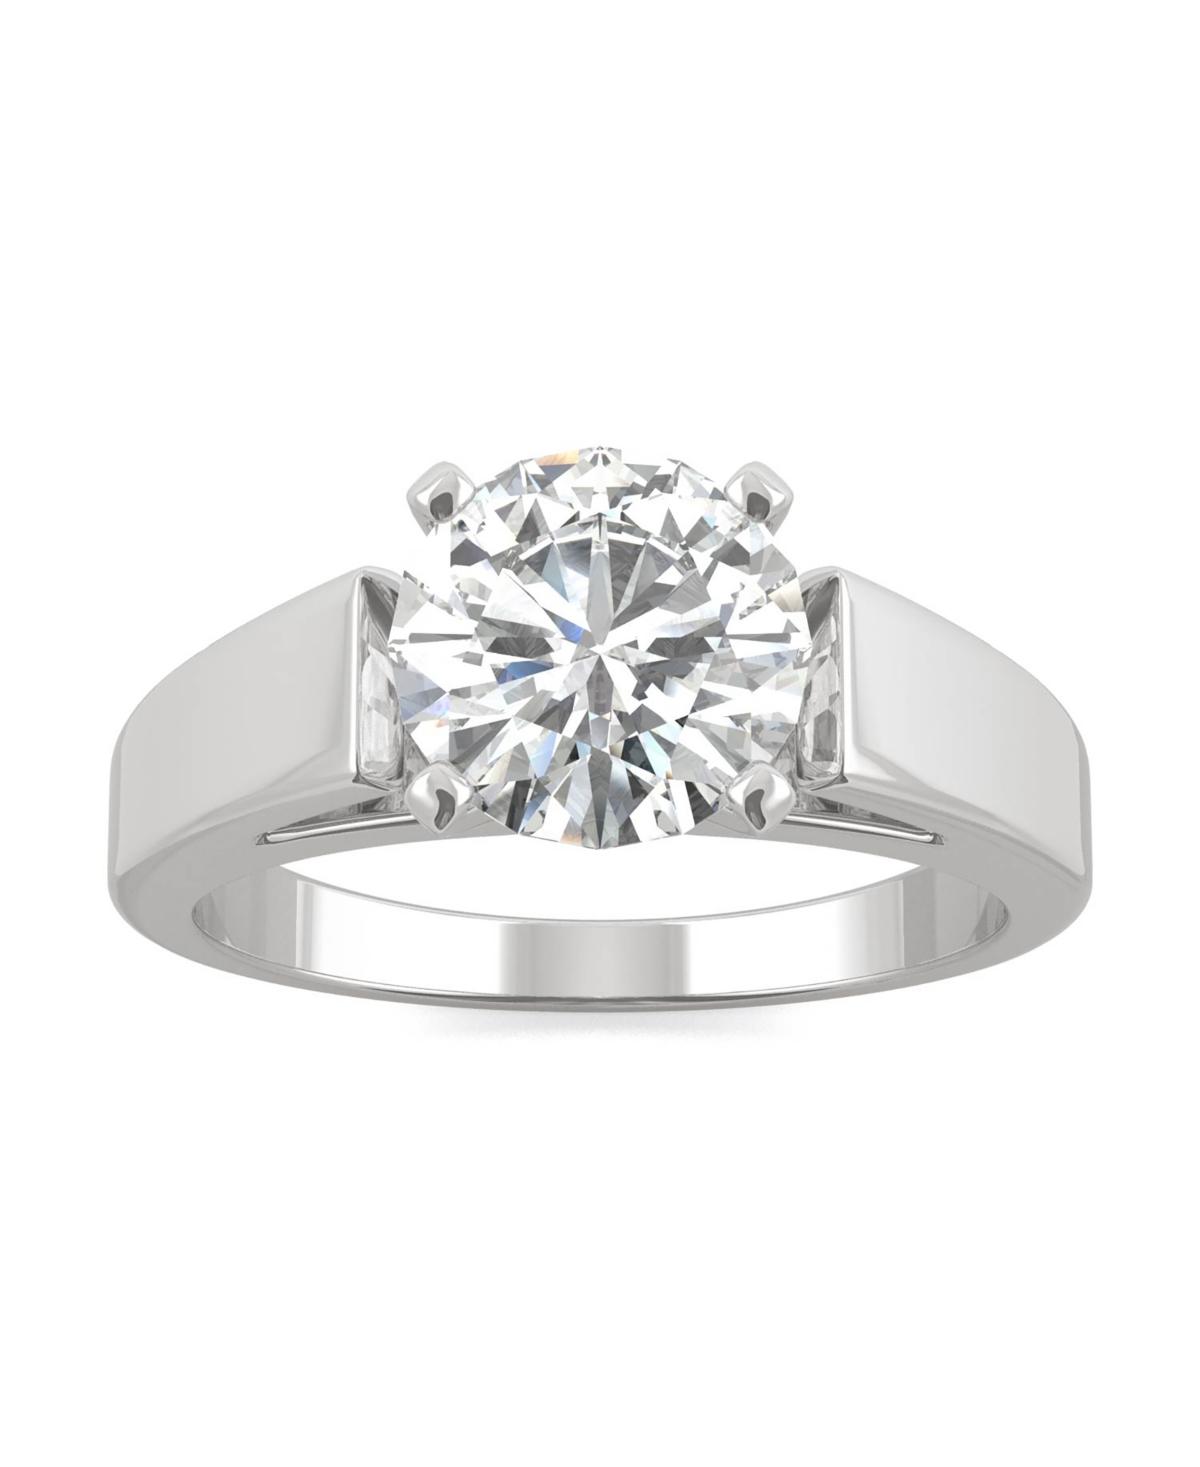 Moissanite Solitaire Ring 1-9/10 ct. t.w. Diamond Equivalent in 14k White Gold - White Gold